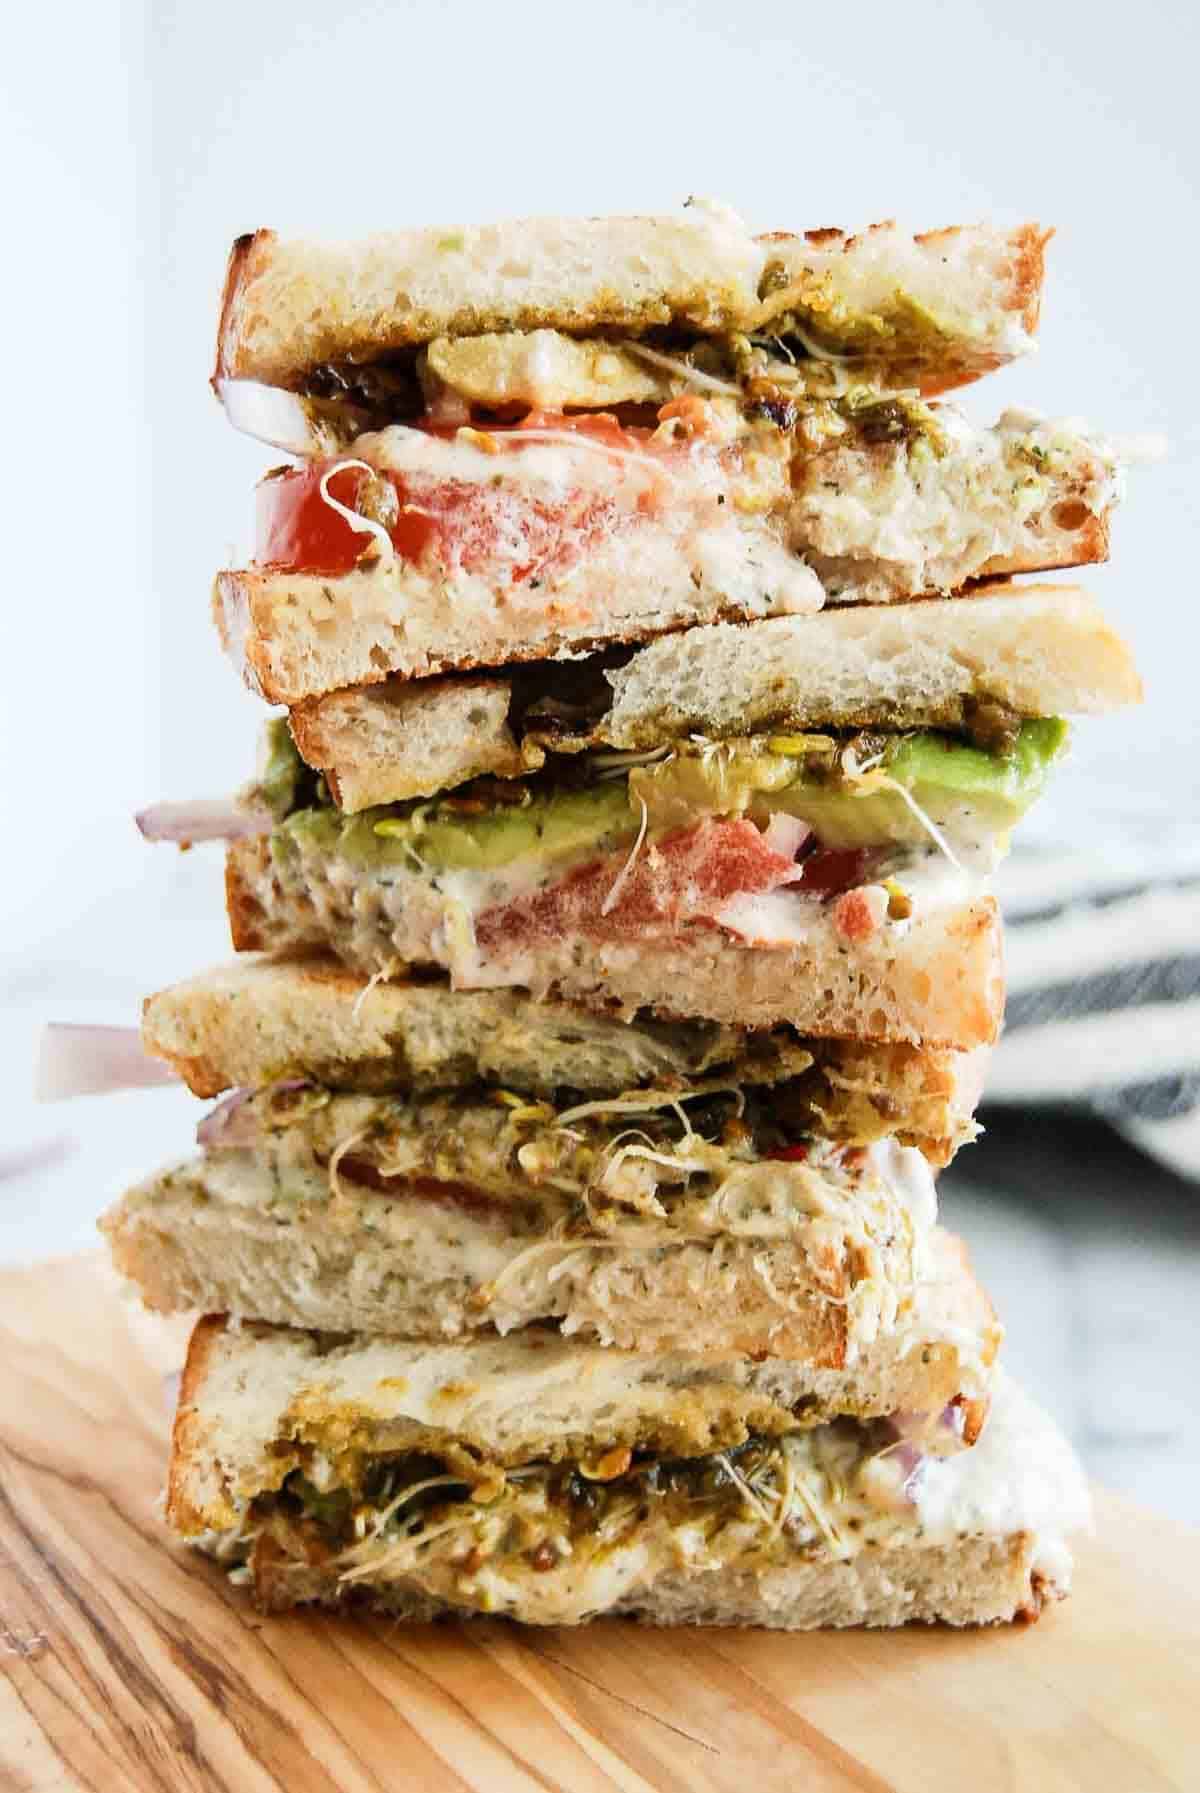 stacked tunacado sandwiches on cutting board.